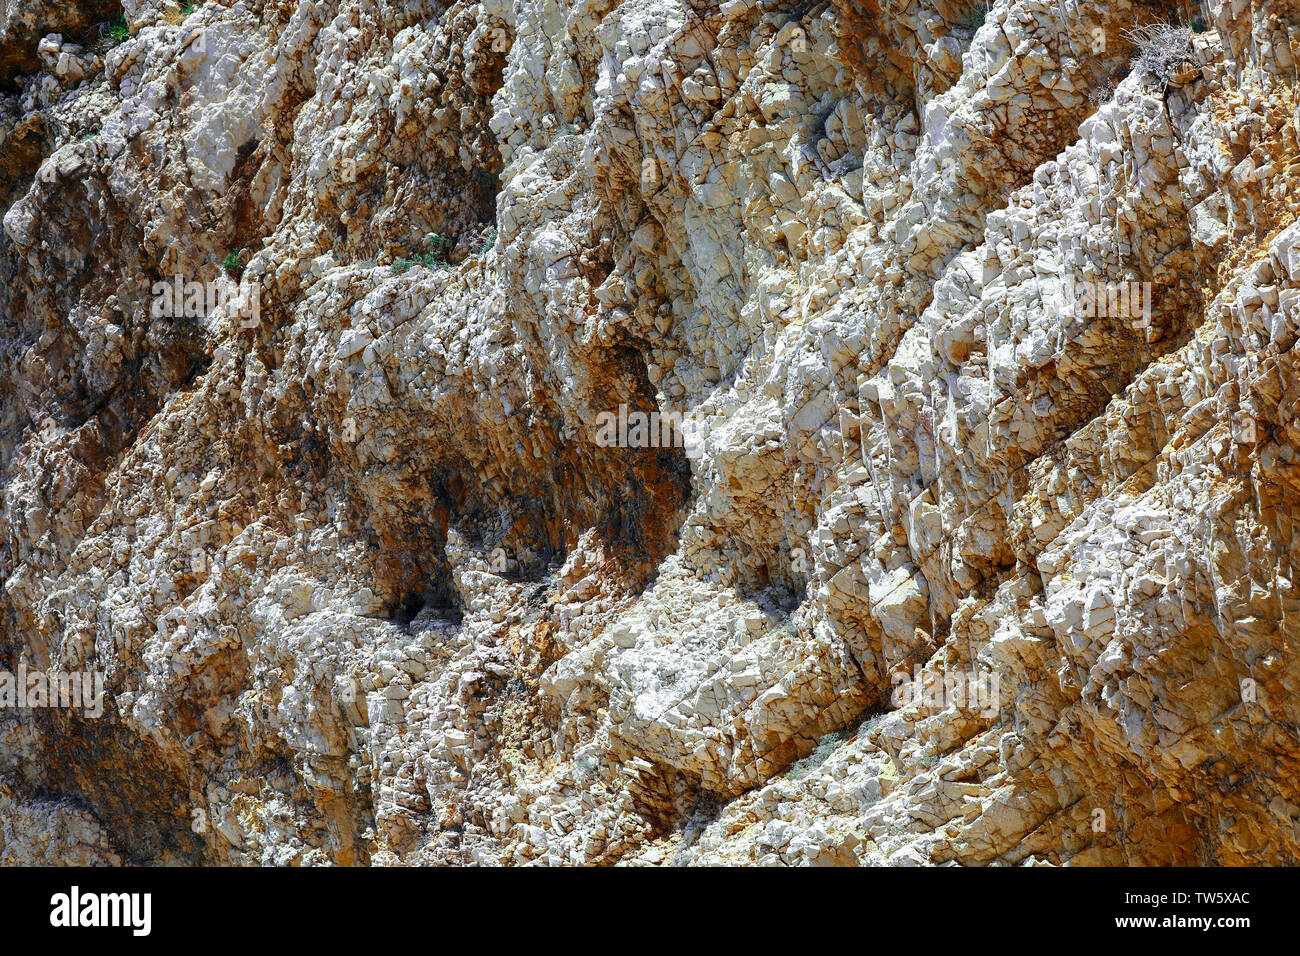 https://c8.alamy.com/comp/TW5XAC/bright-and-high-contrast-rocky-stones-at-the-marina-in-croatia-TW5XAC.jpg